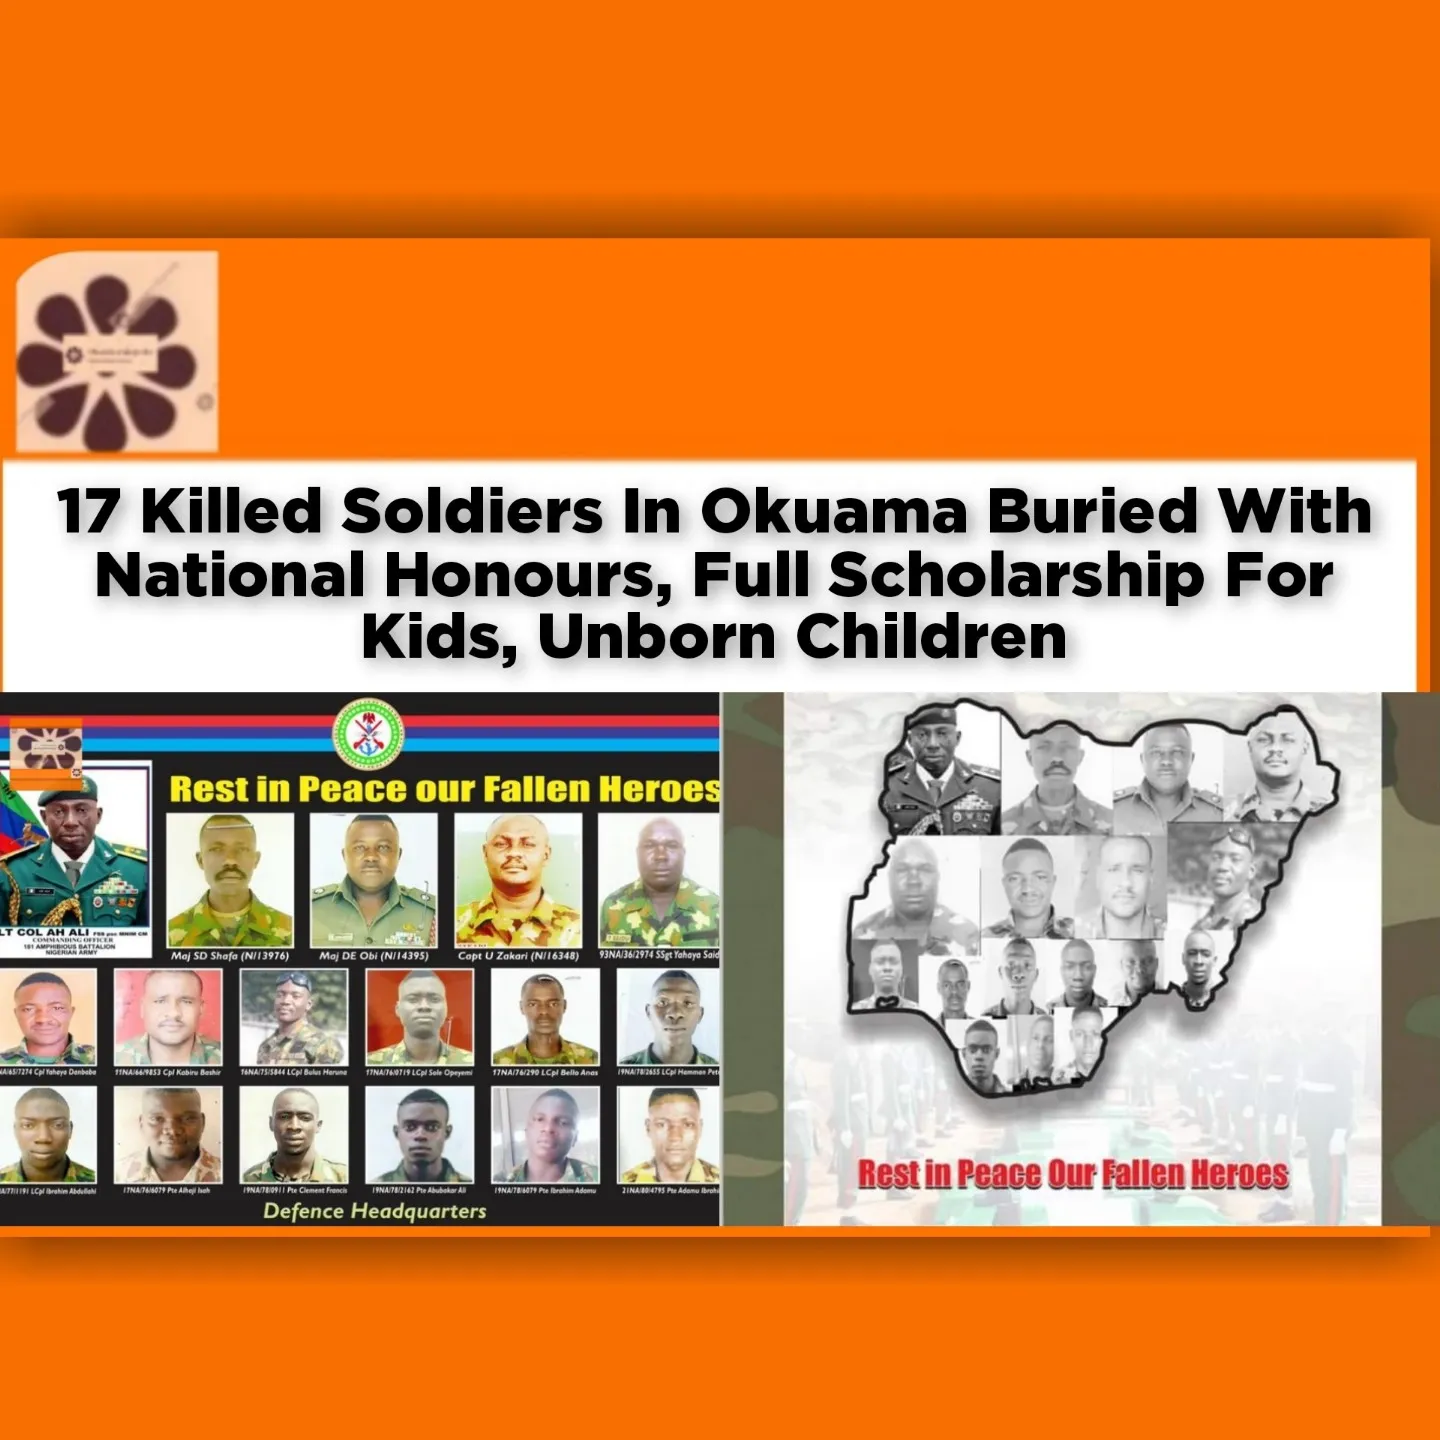 17 Killed Soldiers In Okuama Buried With National Honours, Full Scholarship For Kids, Unborn Children ~ OsazuwaAkonedo #Bola #Delta #Kiagbodo #Okoloba #Okuama #soldiers #Tinubu